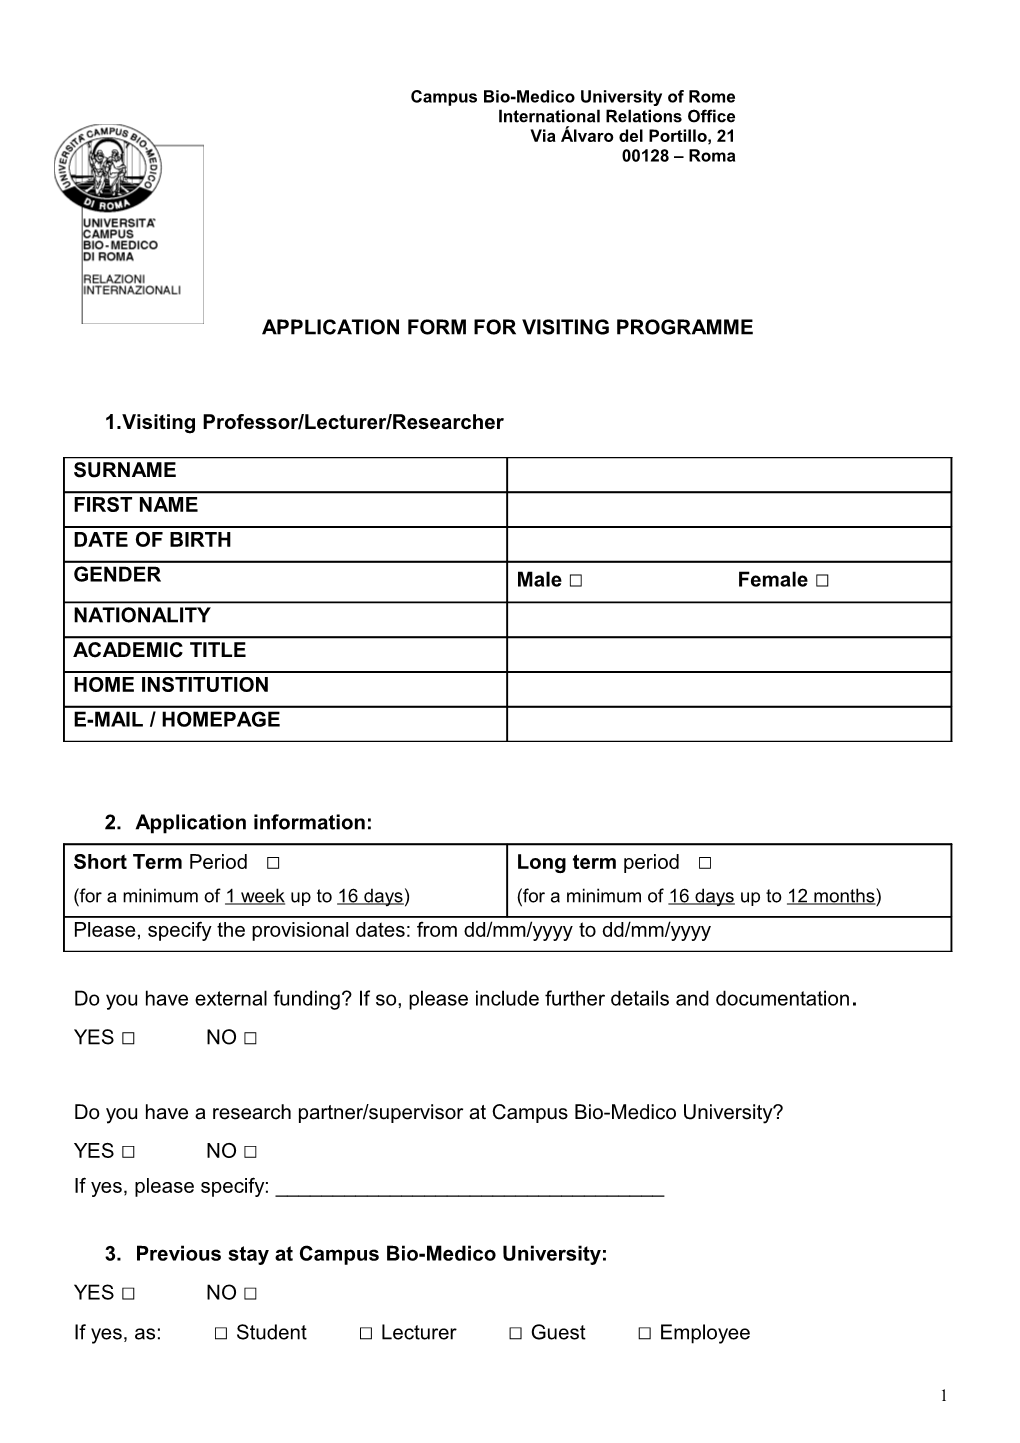 Application Form for Visiting Programme